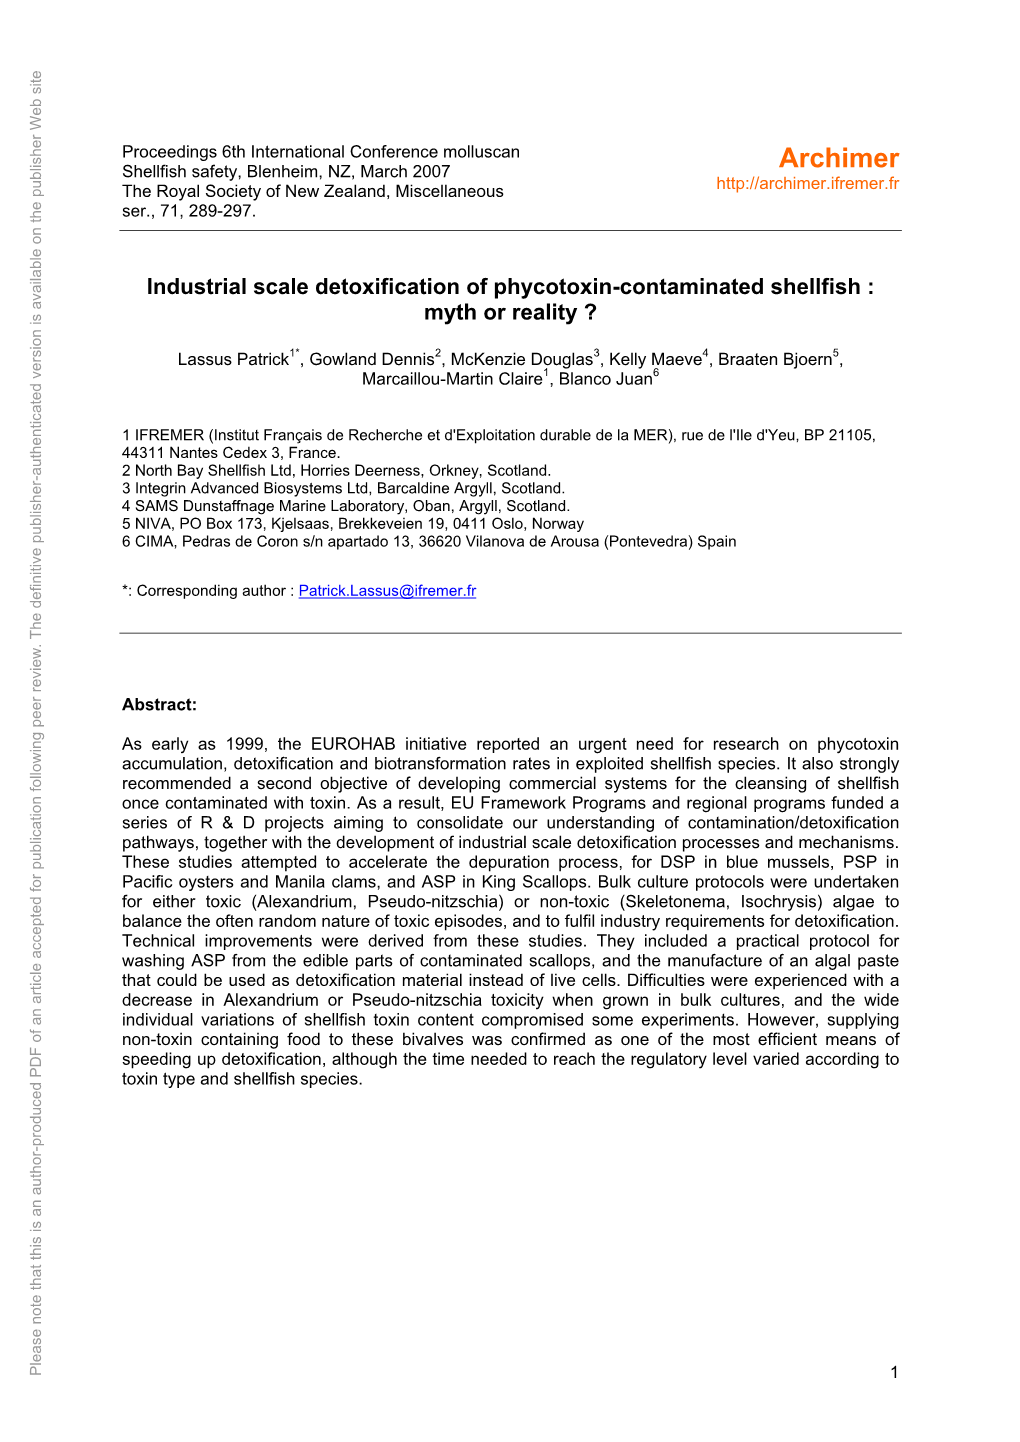 Industrial Scale Detoxification of Phycotoxin-Contaminated Shellfish